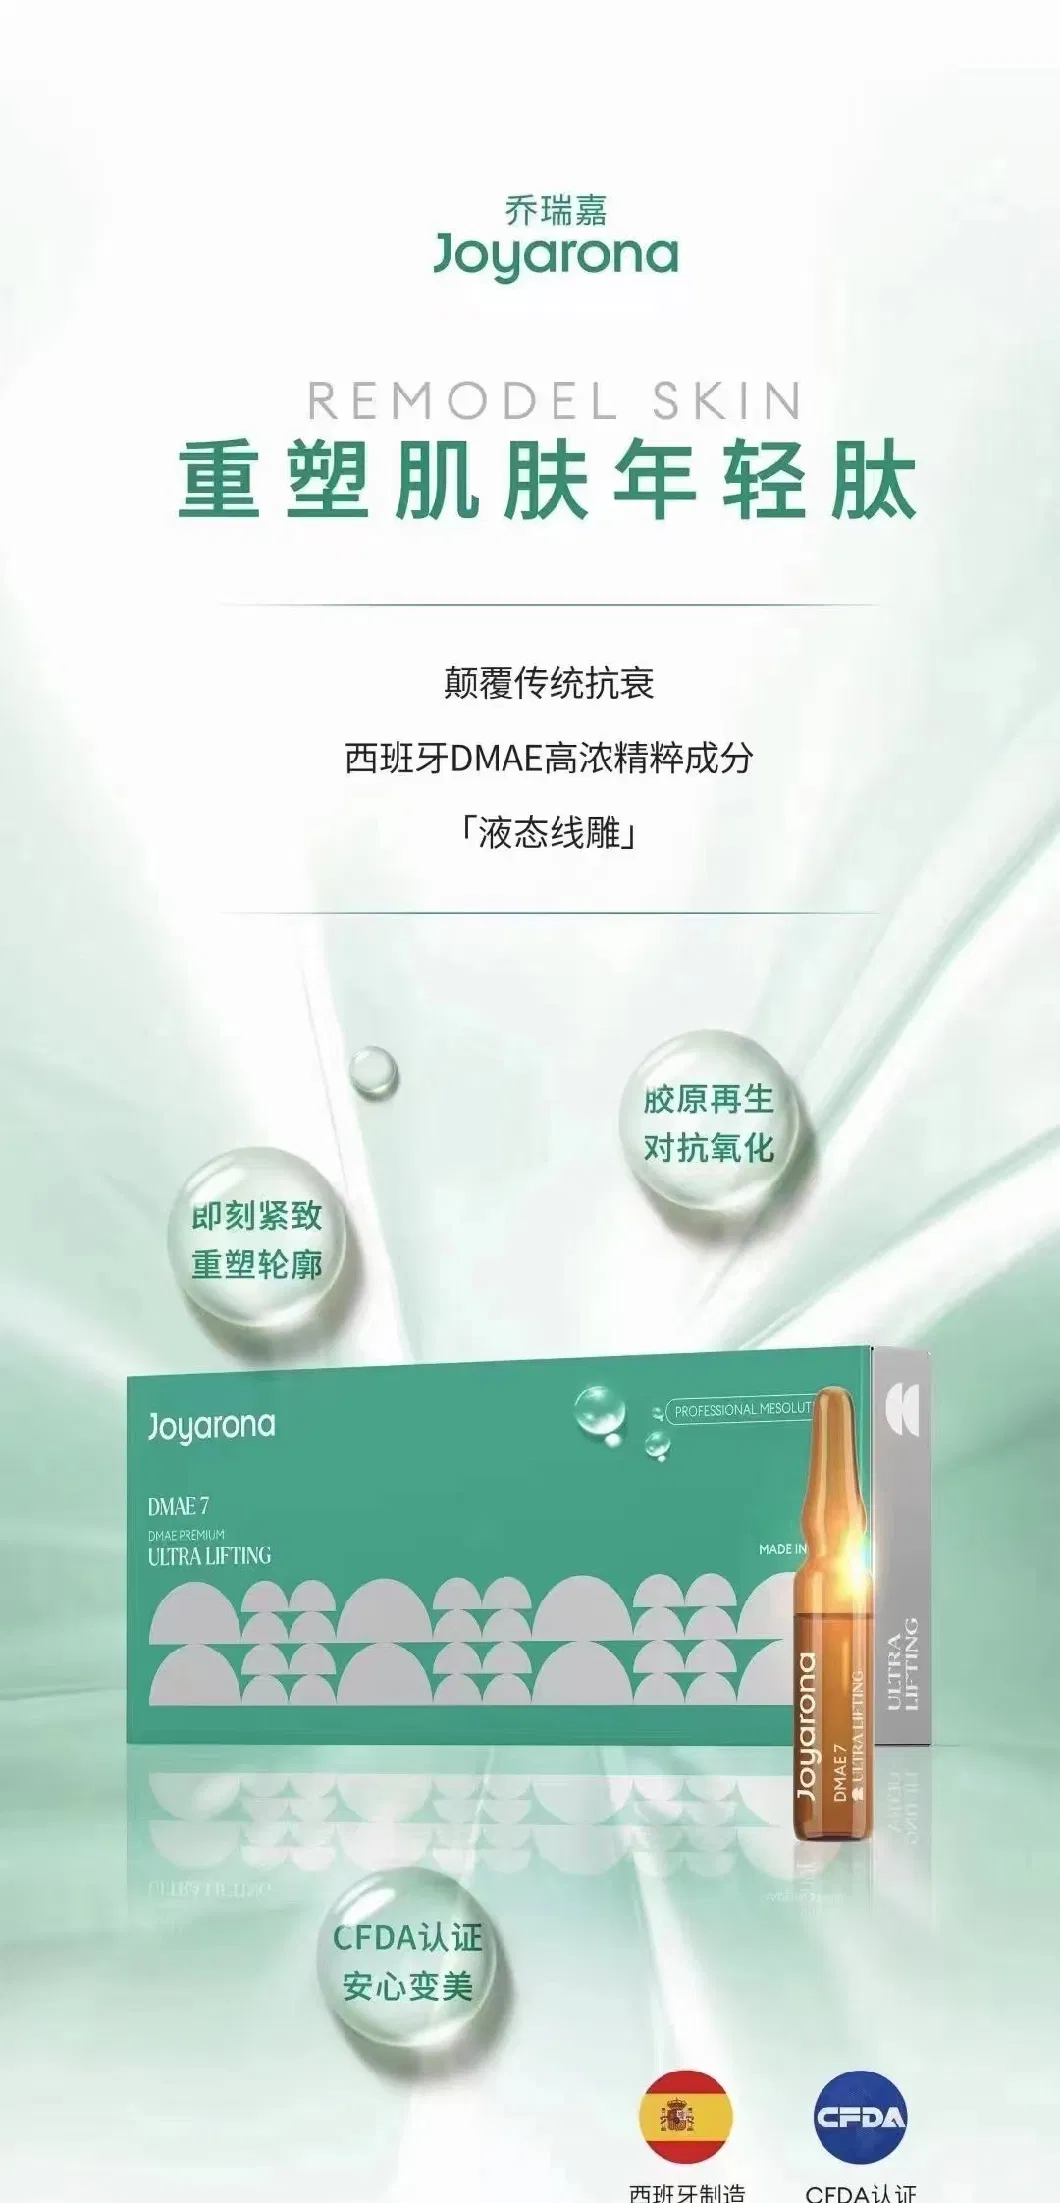 Spain Brand Liquid Face Lifting Injection Joyarona Dmae 7 Premium for Skin Tightening Anti Aging Profhilo Nucleofill Bellona Hyaluronic Acid Derma Heal